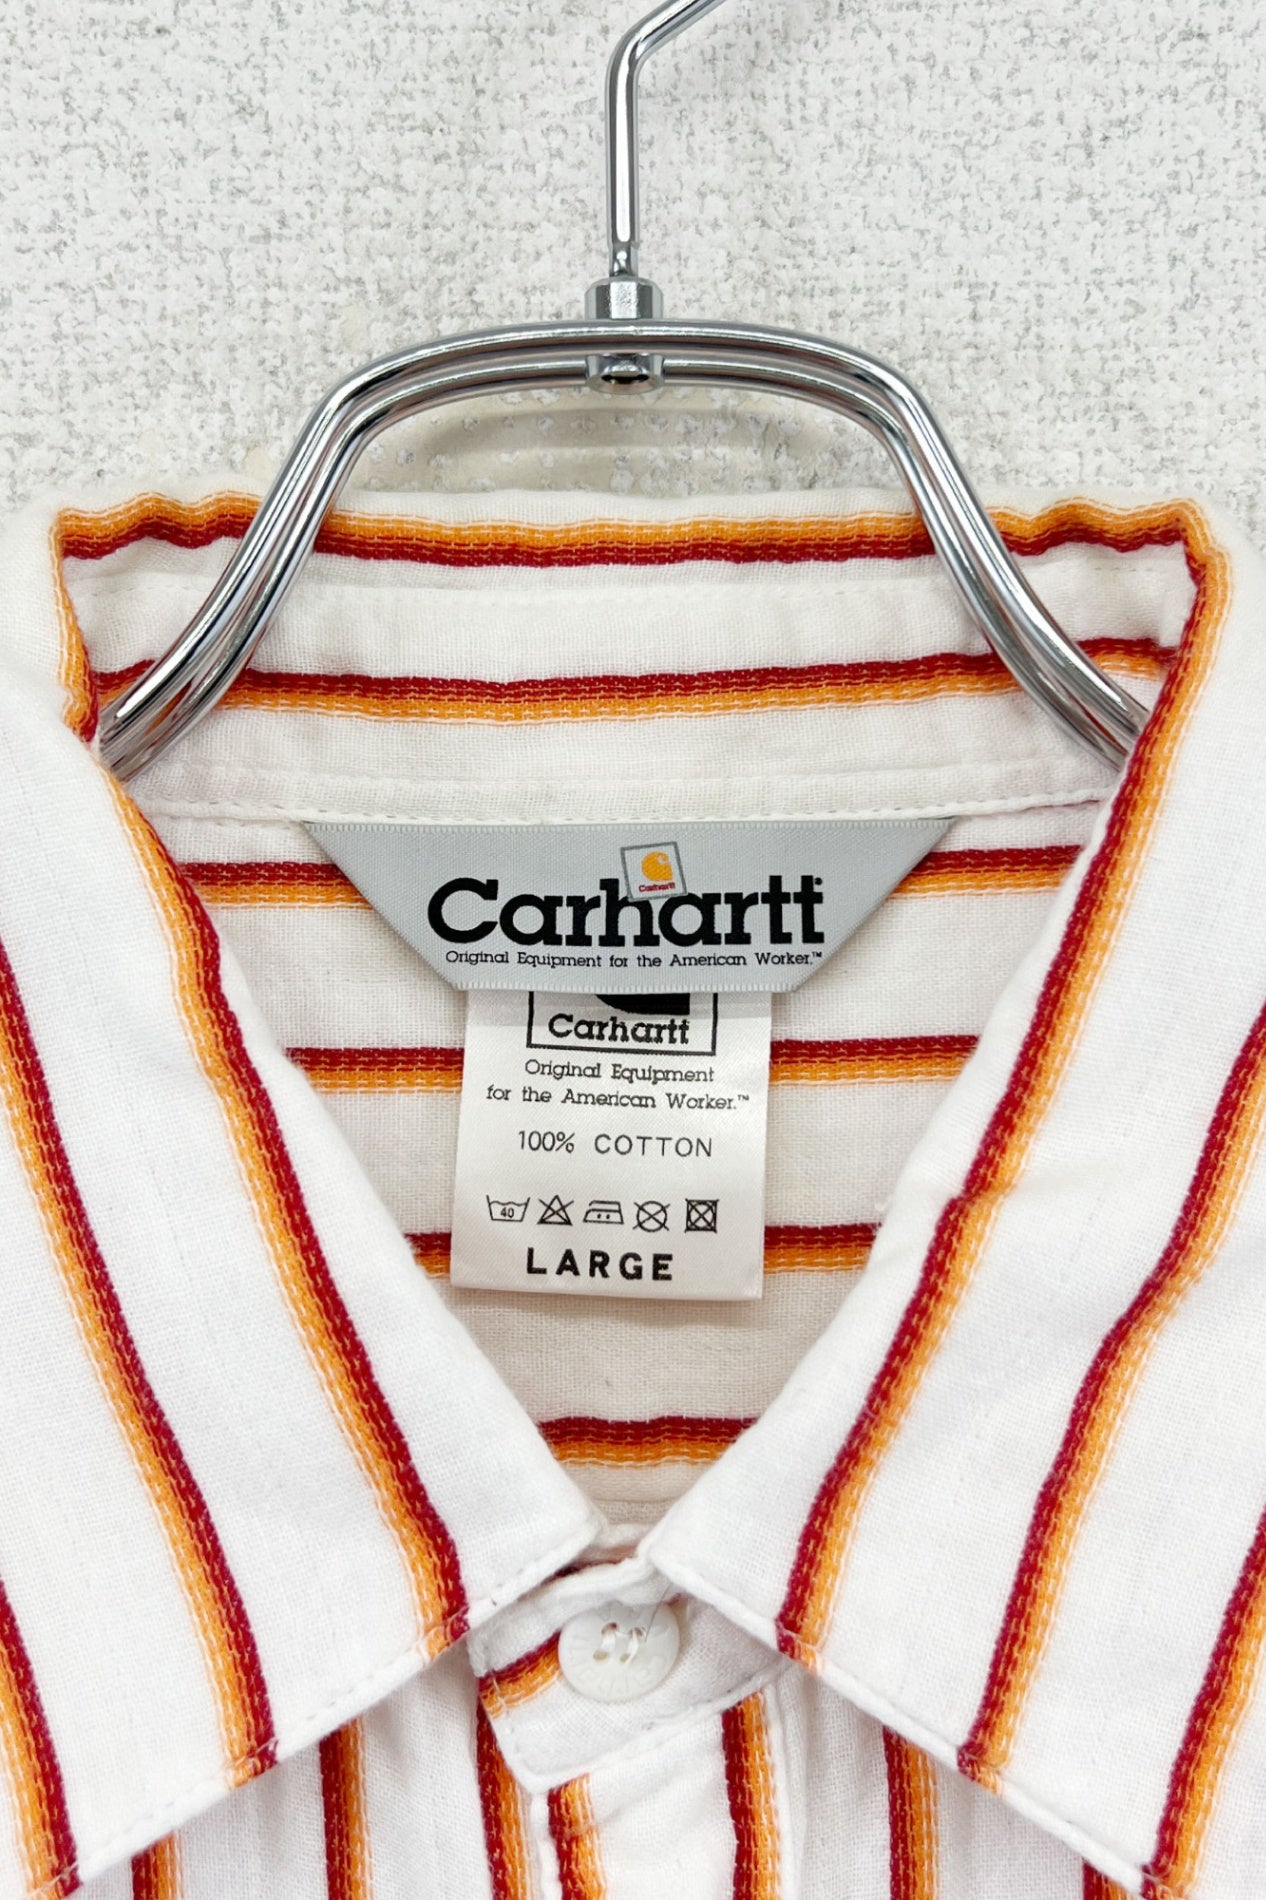 Carhartt stripe shirt